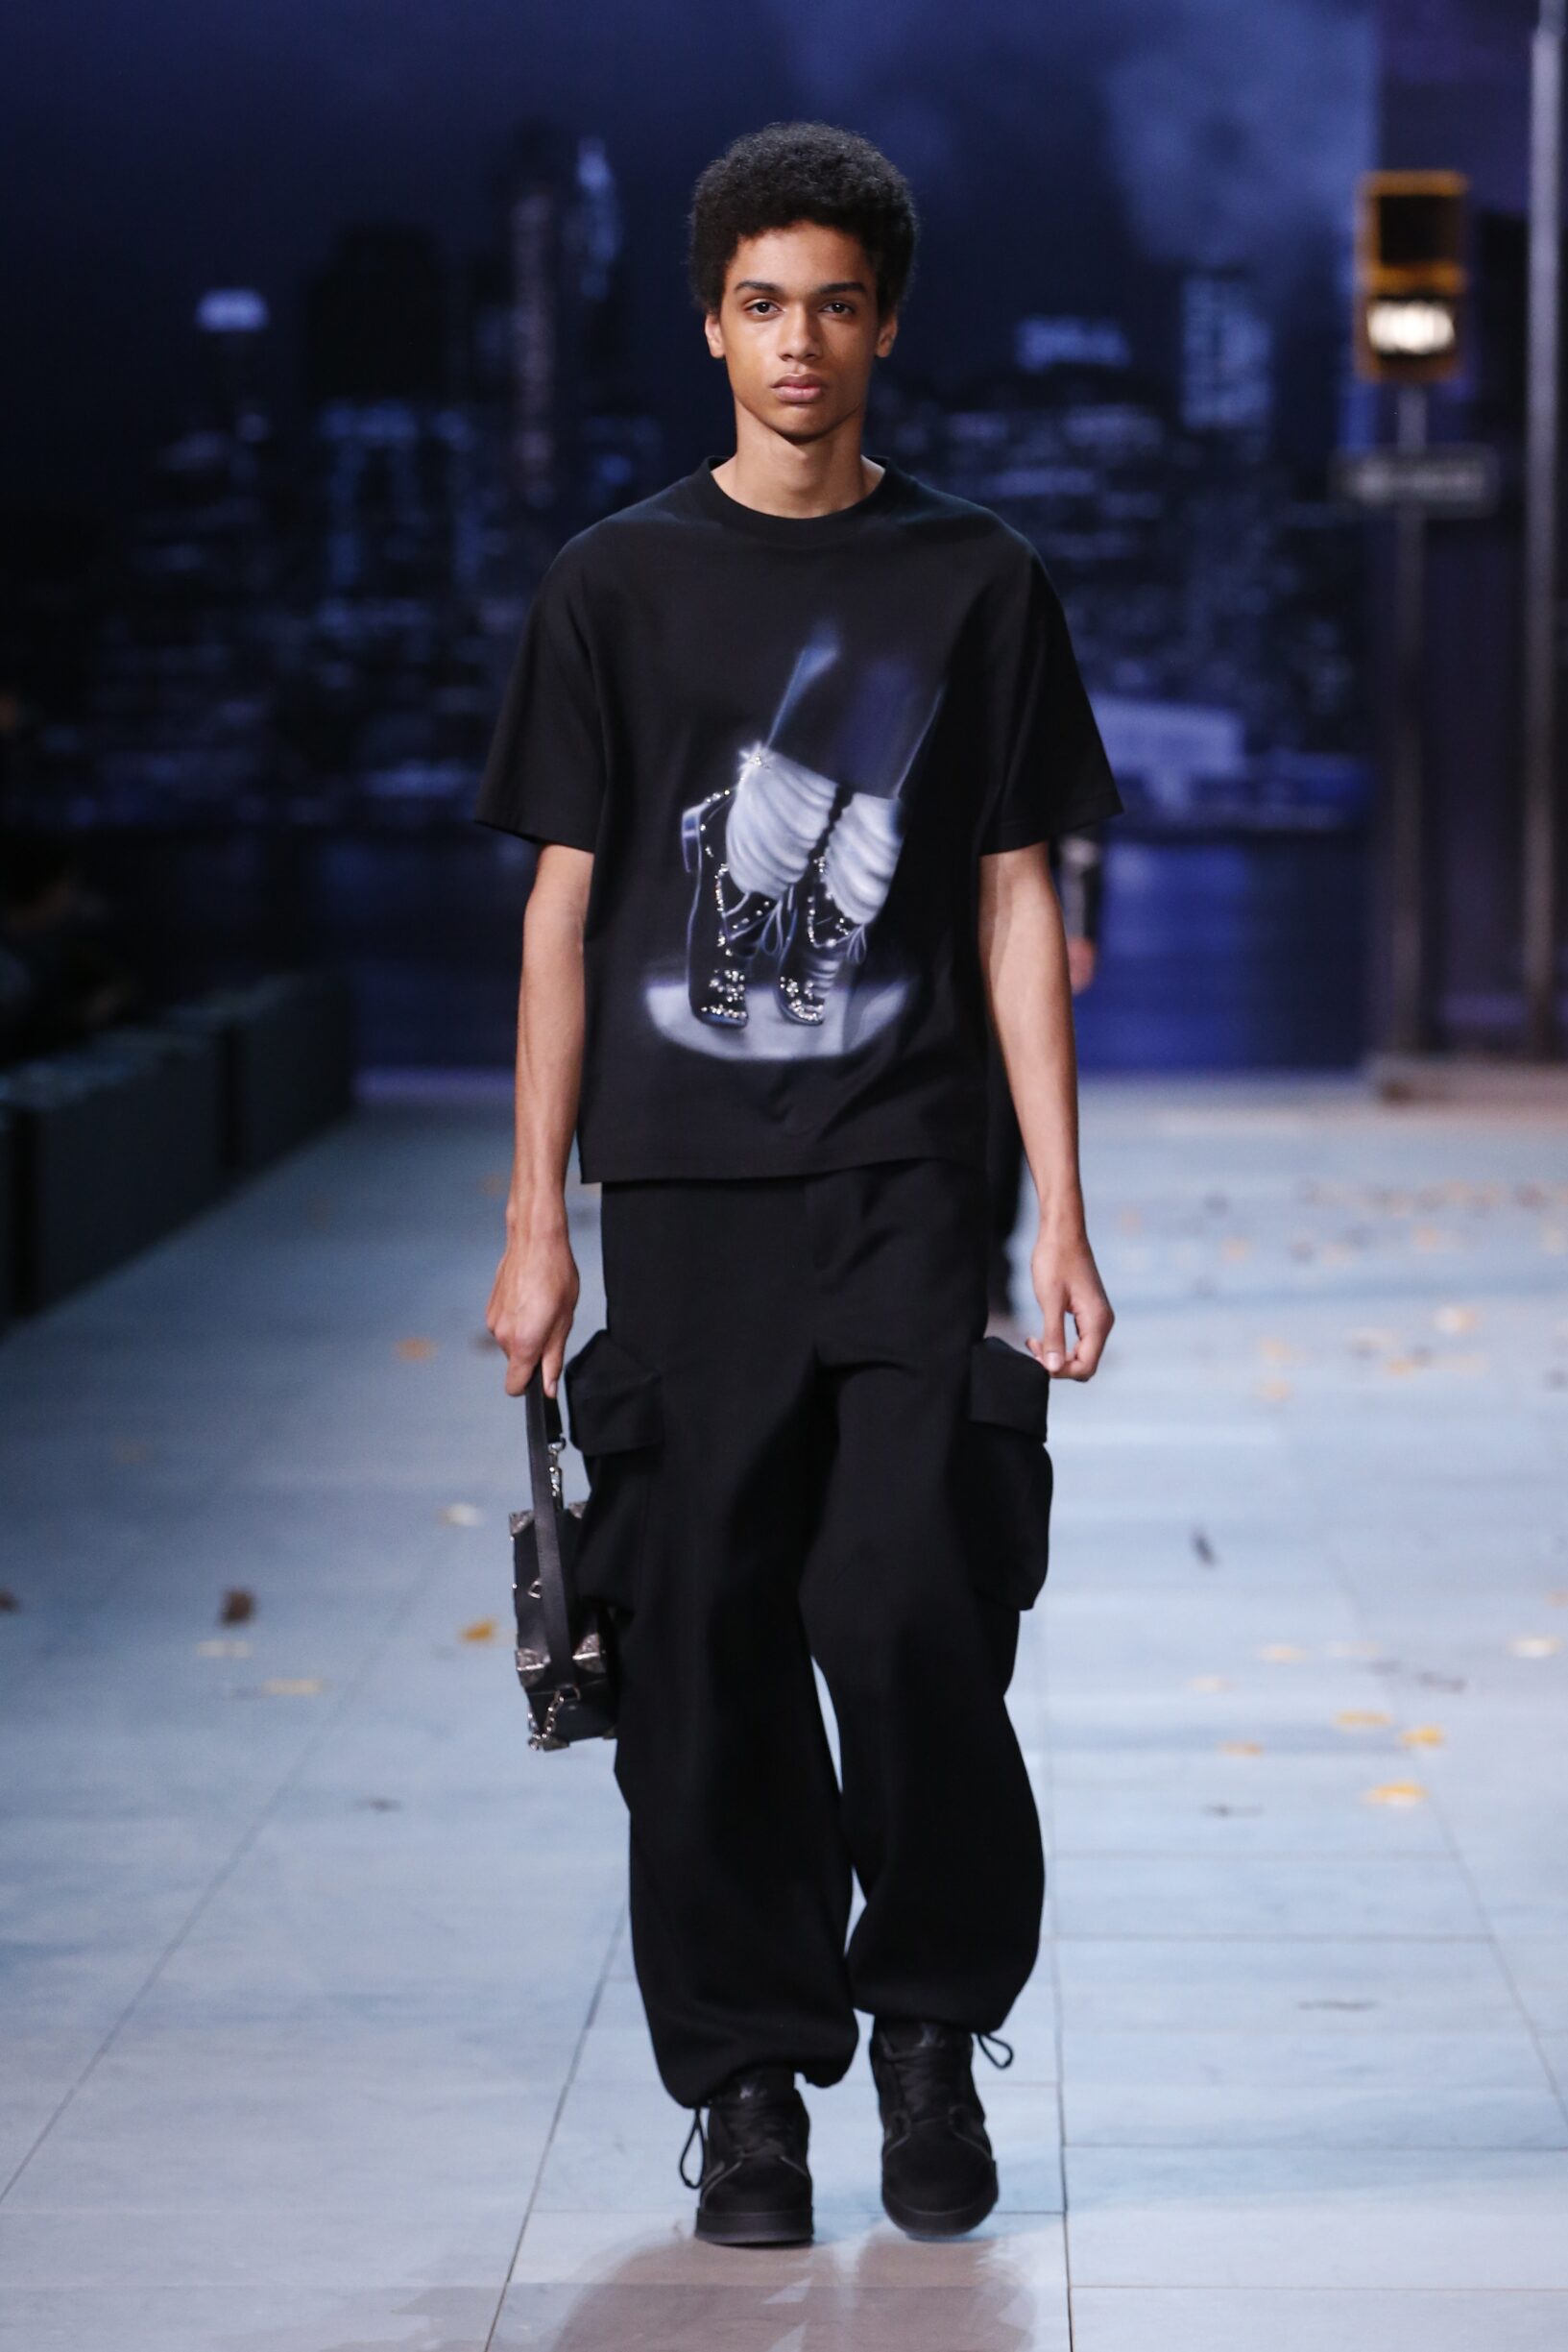 Louis Vuitton Menswear Collection Trends